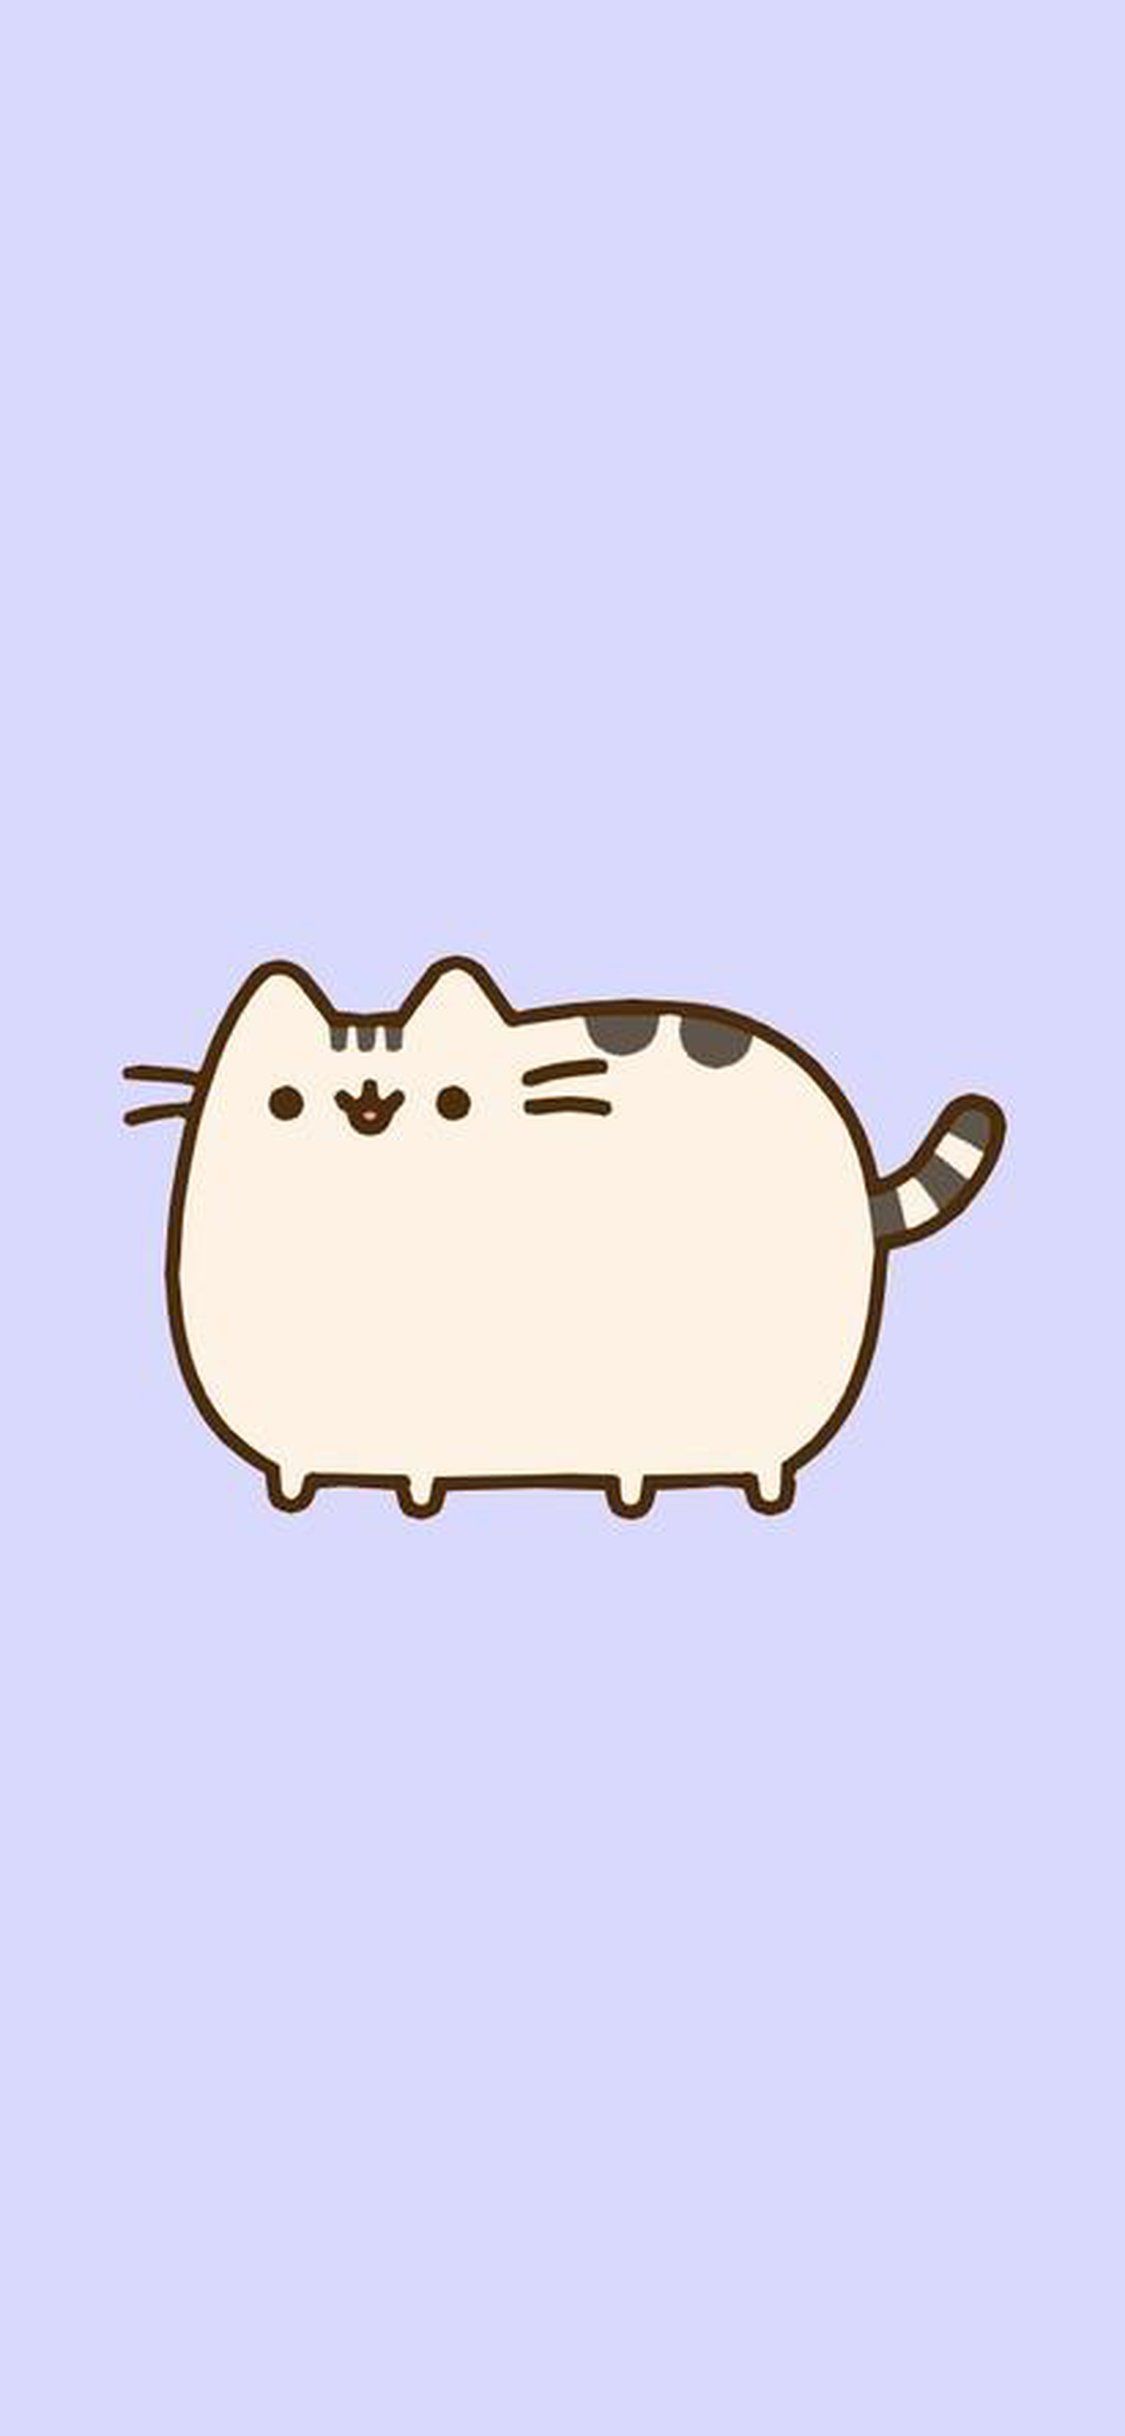 Download Funny Fat Pusheen Cat For iPhone X Wallpaper